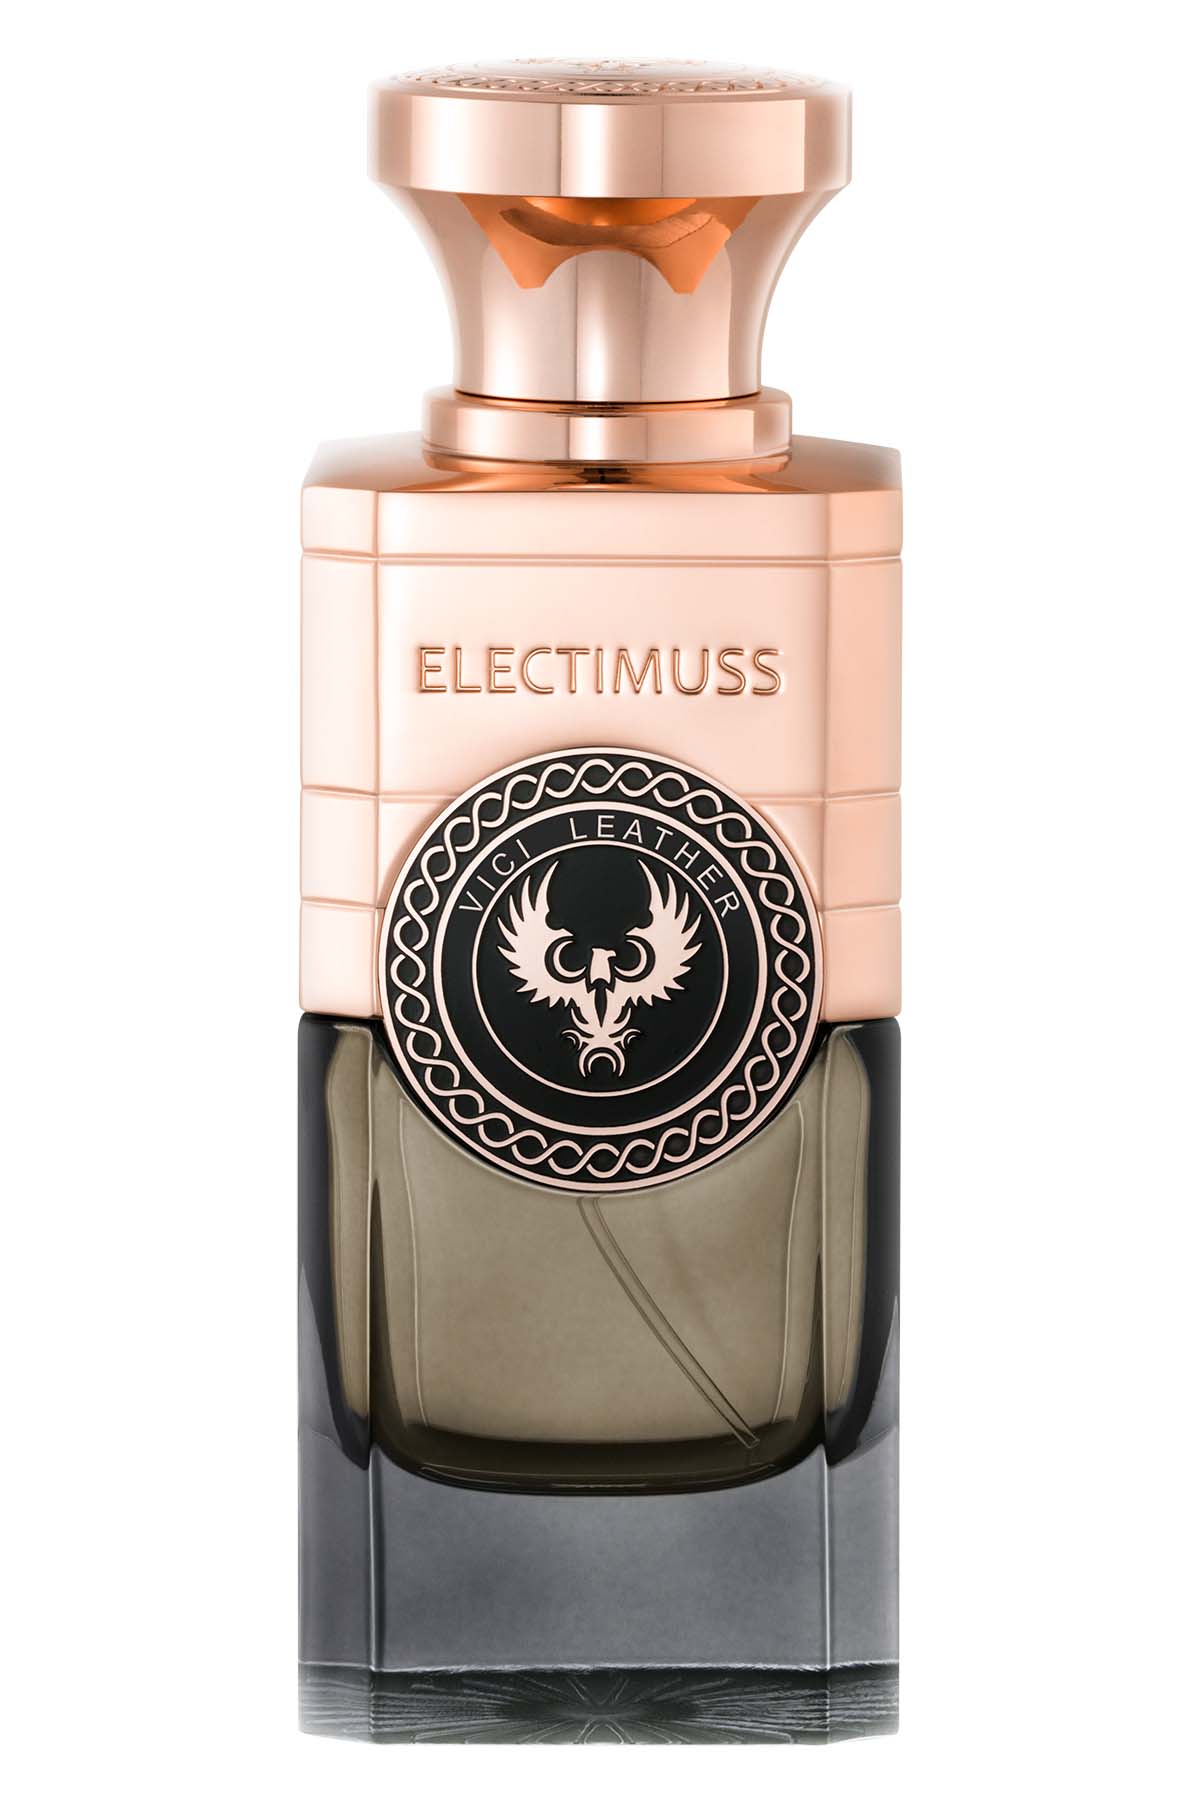 Electimuss VICI Leather Extrait de Parfum